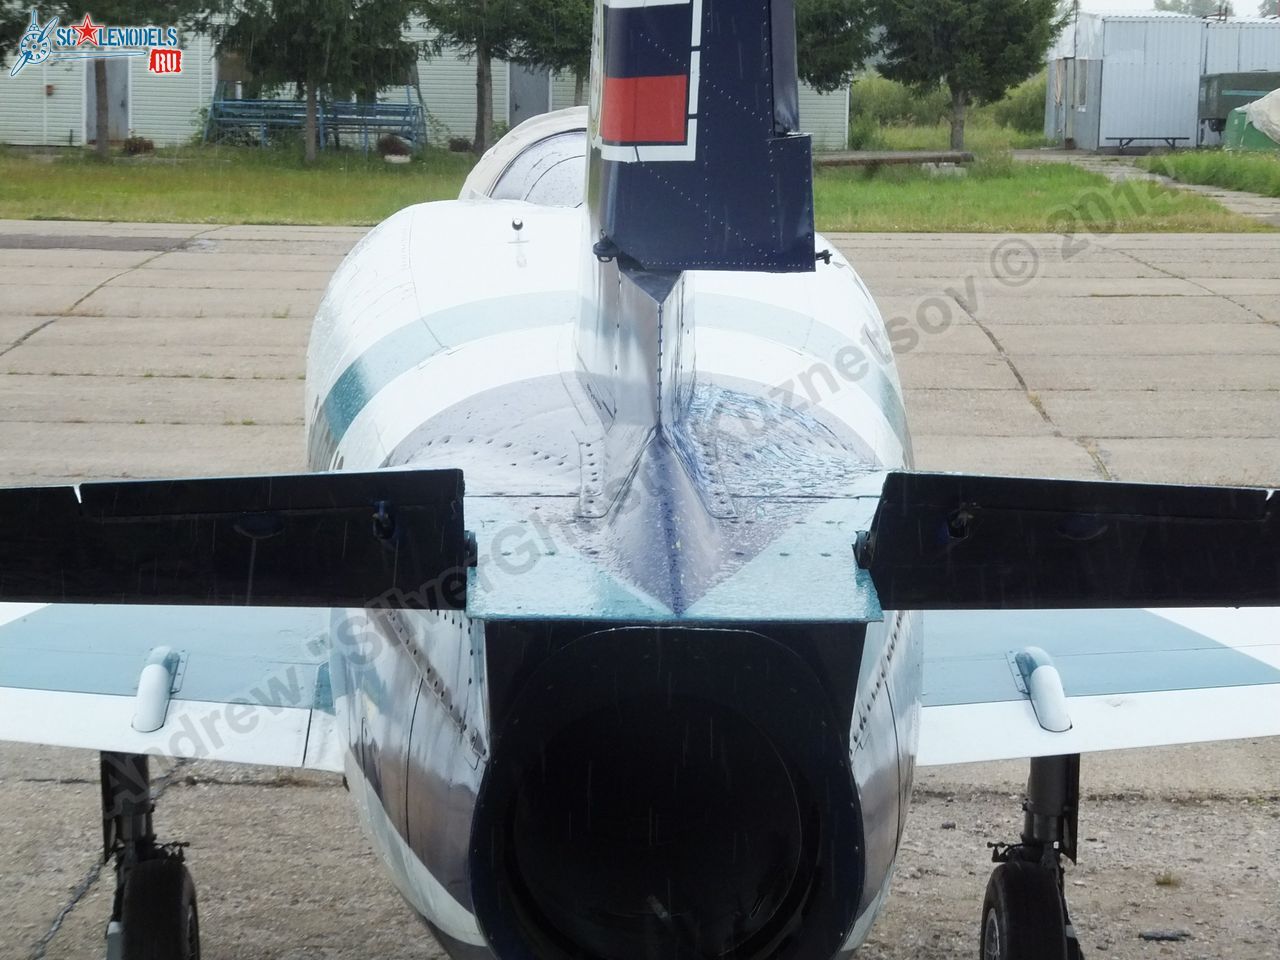 L-39_Albatros_RF-49818_0094.jpg